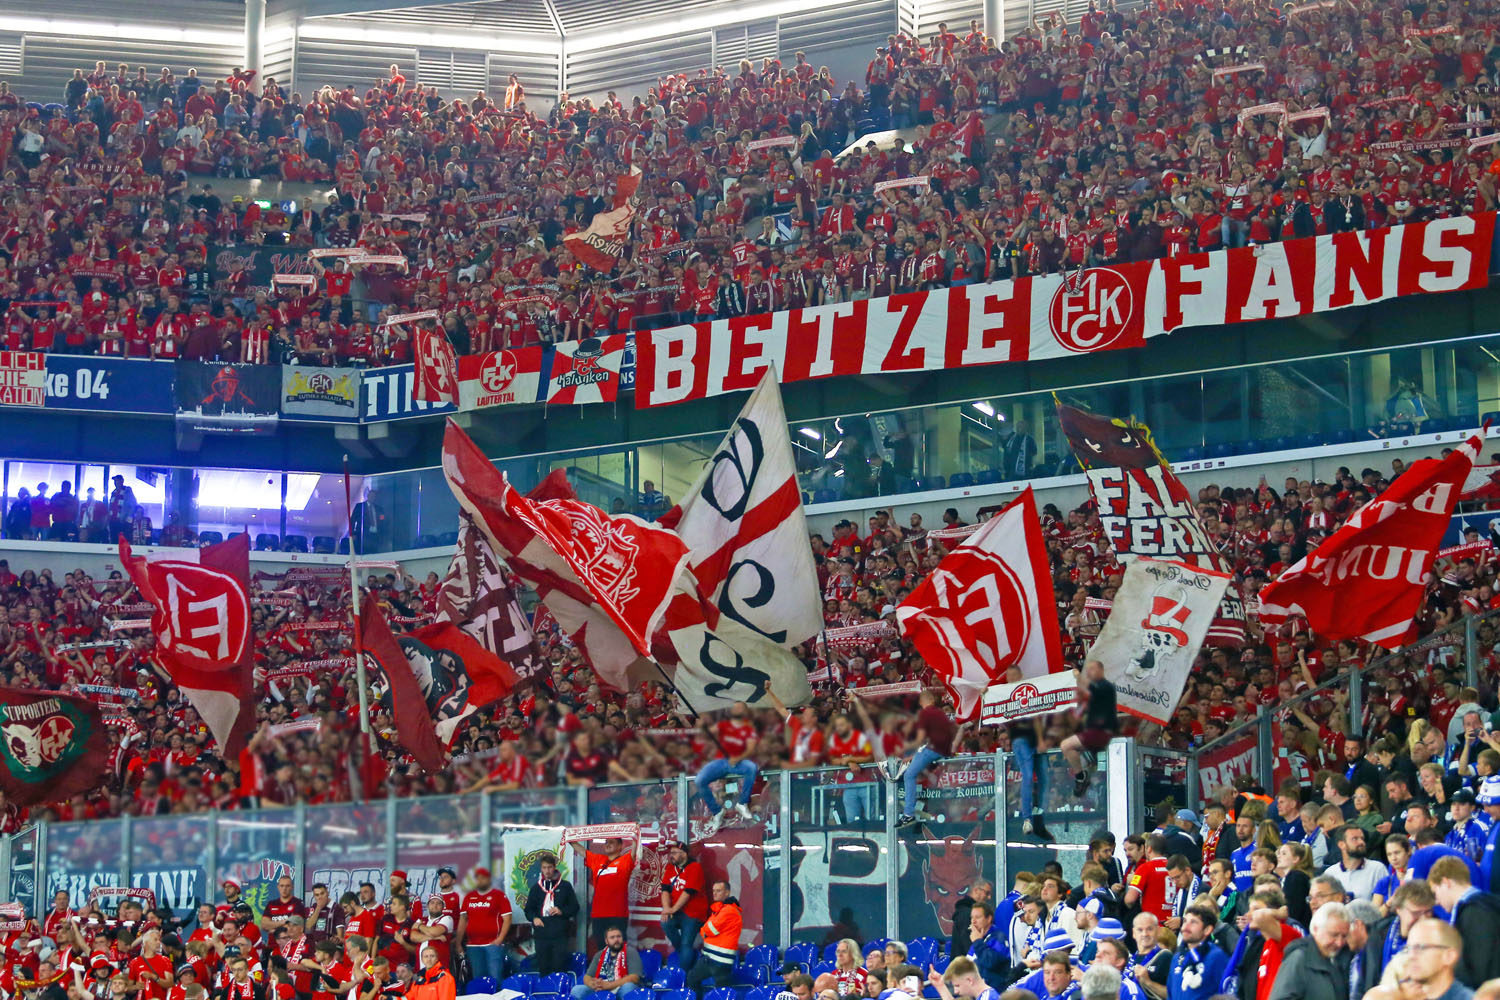 Knapp 7.000 Betze-Fans in der Schalker Arena